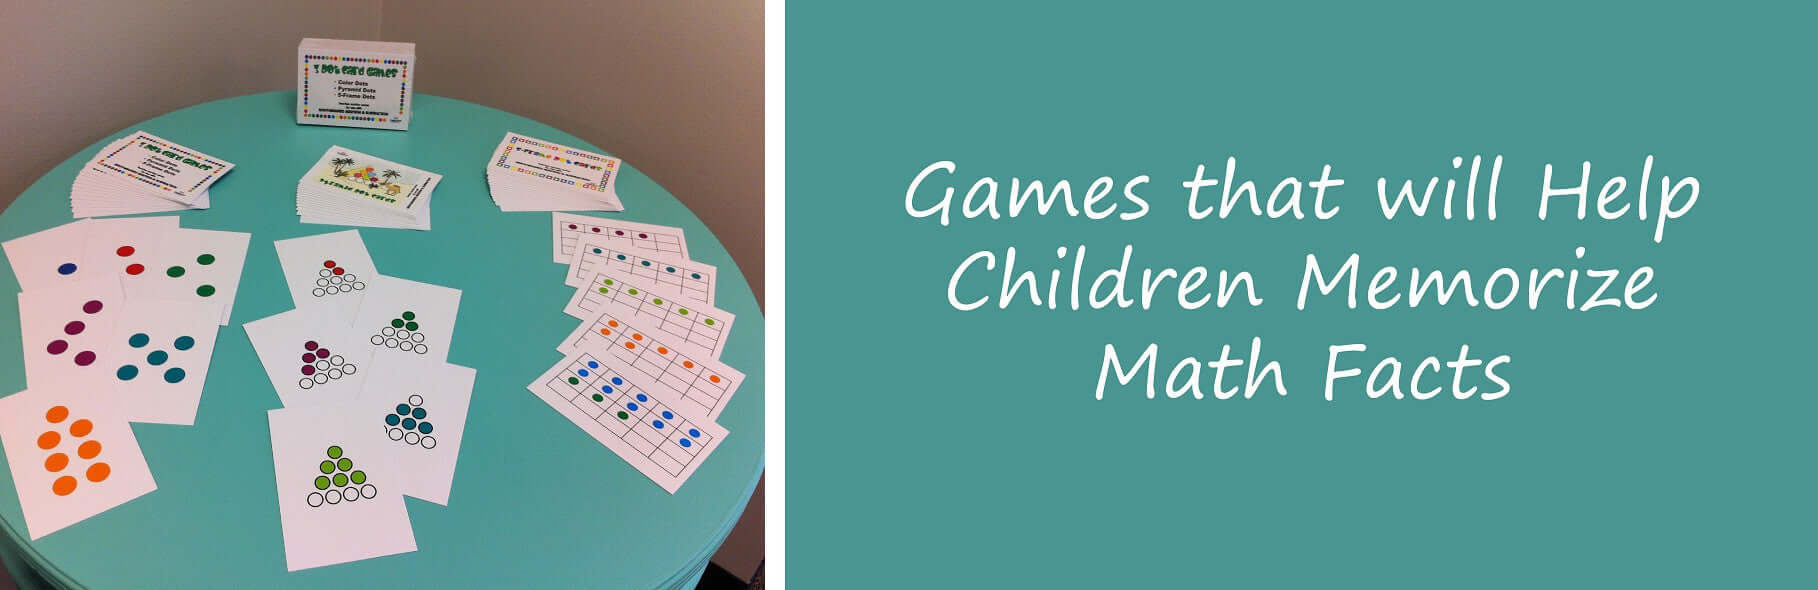 Games that will Help Children Memorize Math Facts